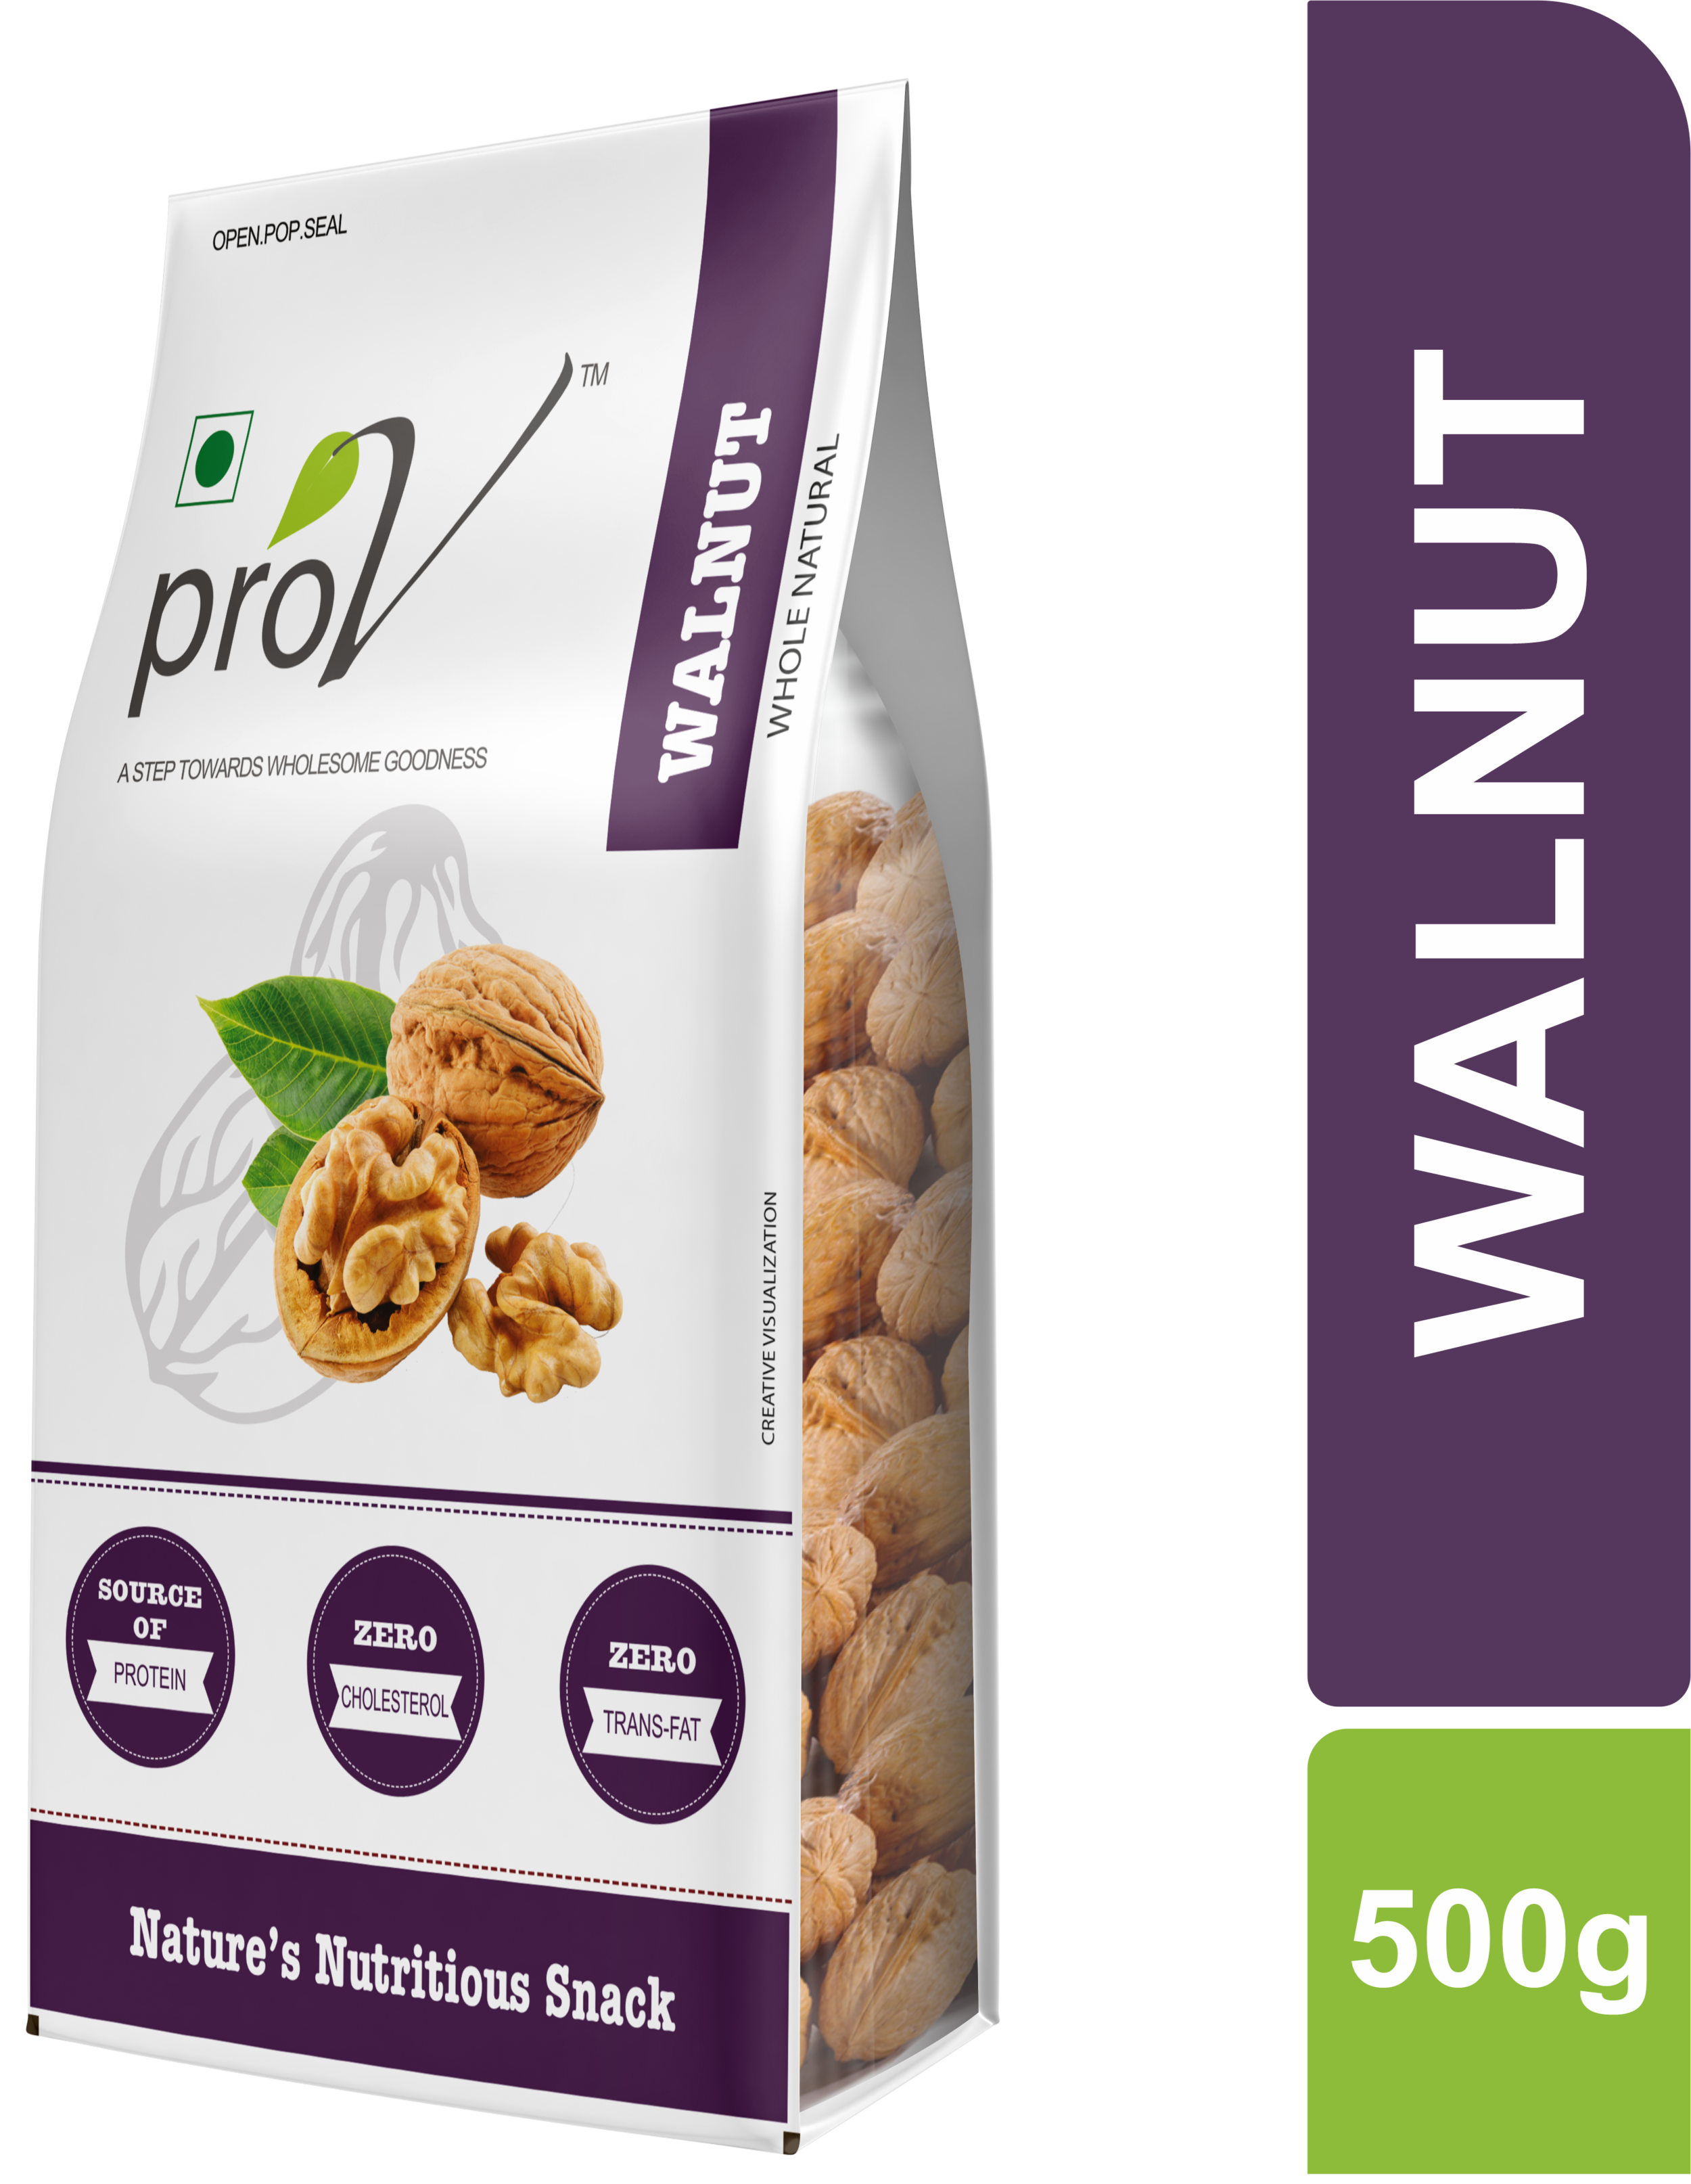 ProV Premium - Walnut Whole California 500g - Front3d.png